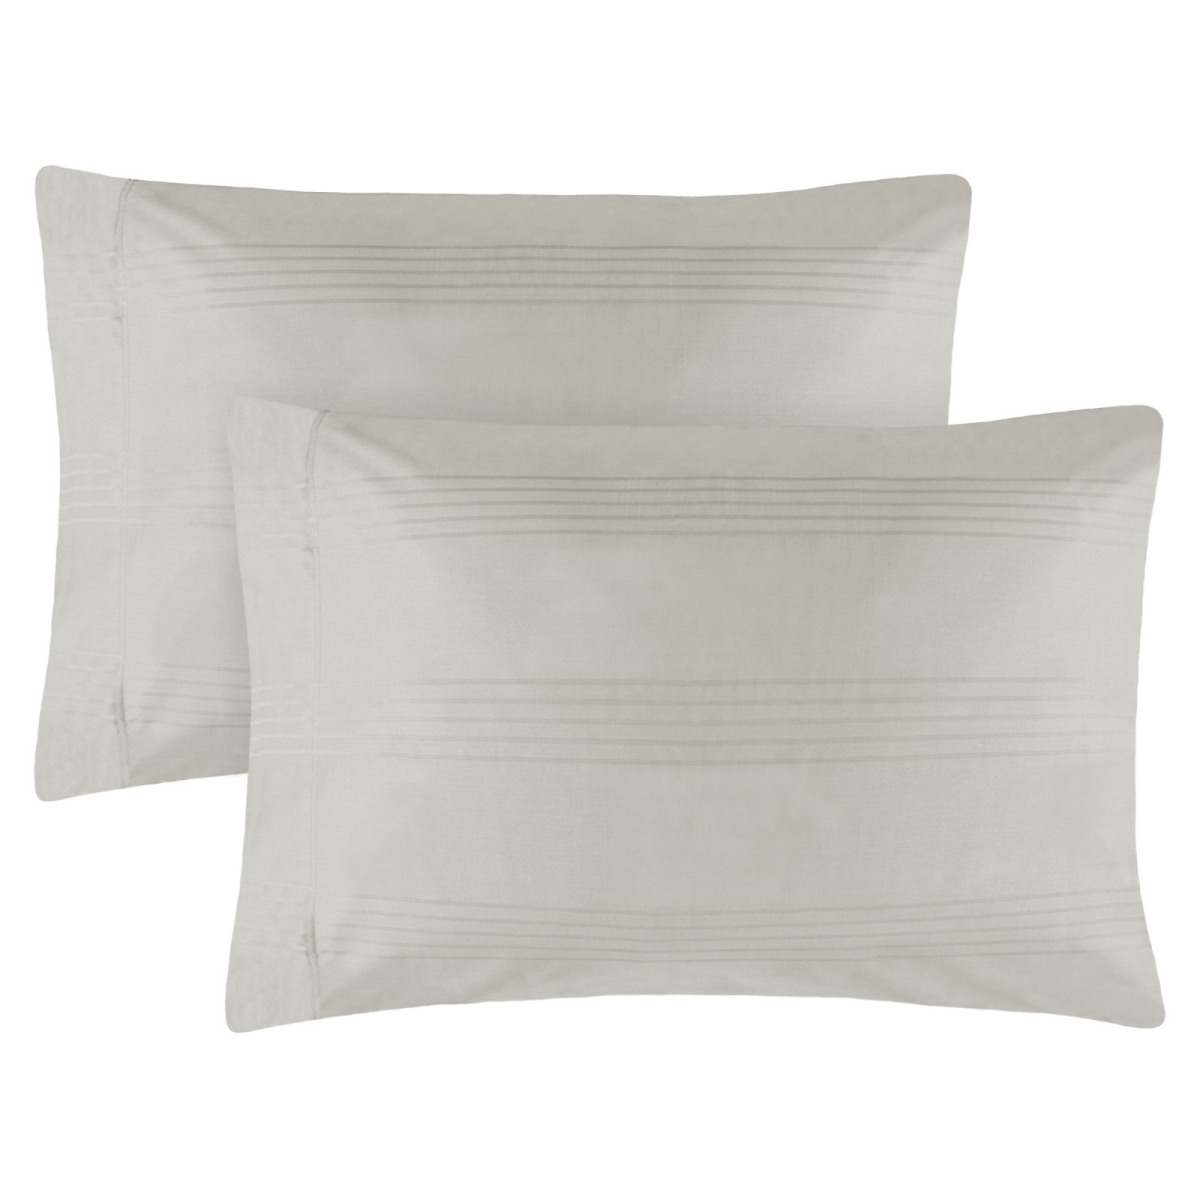 Yms008233 Premium 420 Thread Count 100 Percent Cotton Pillowcase Set, Silver - Standard - 2 Piece